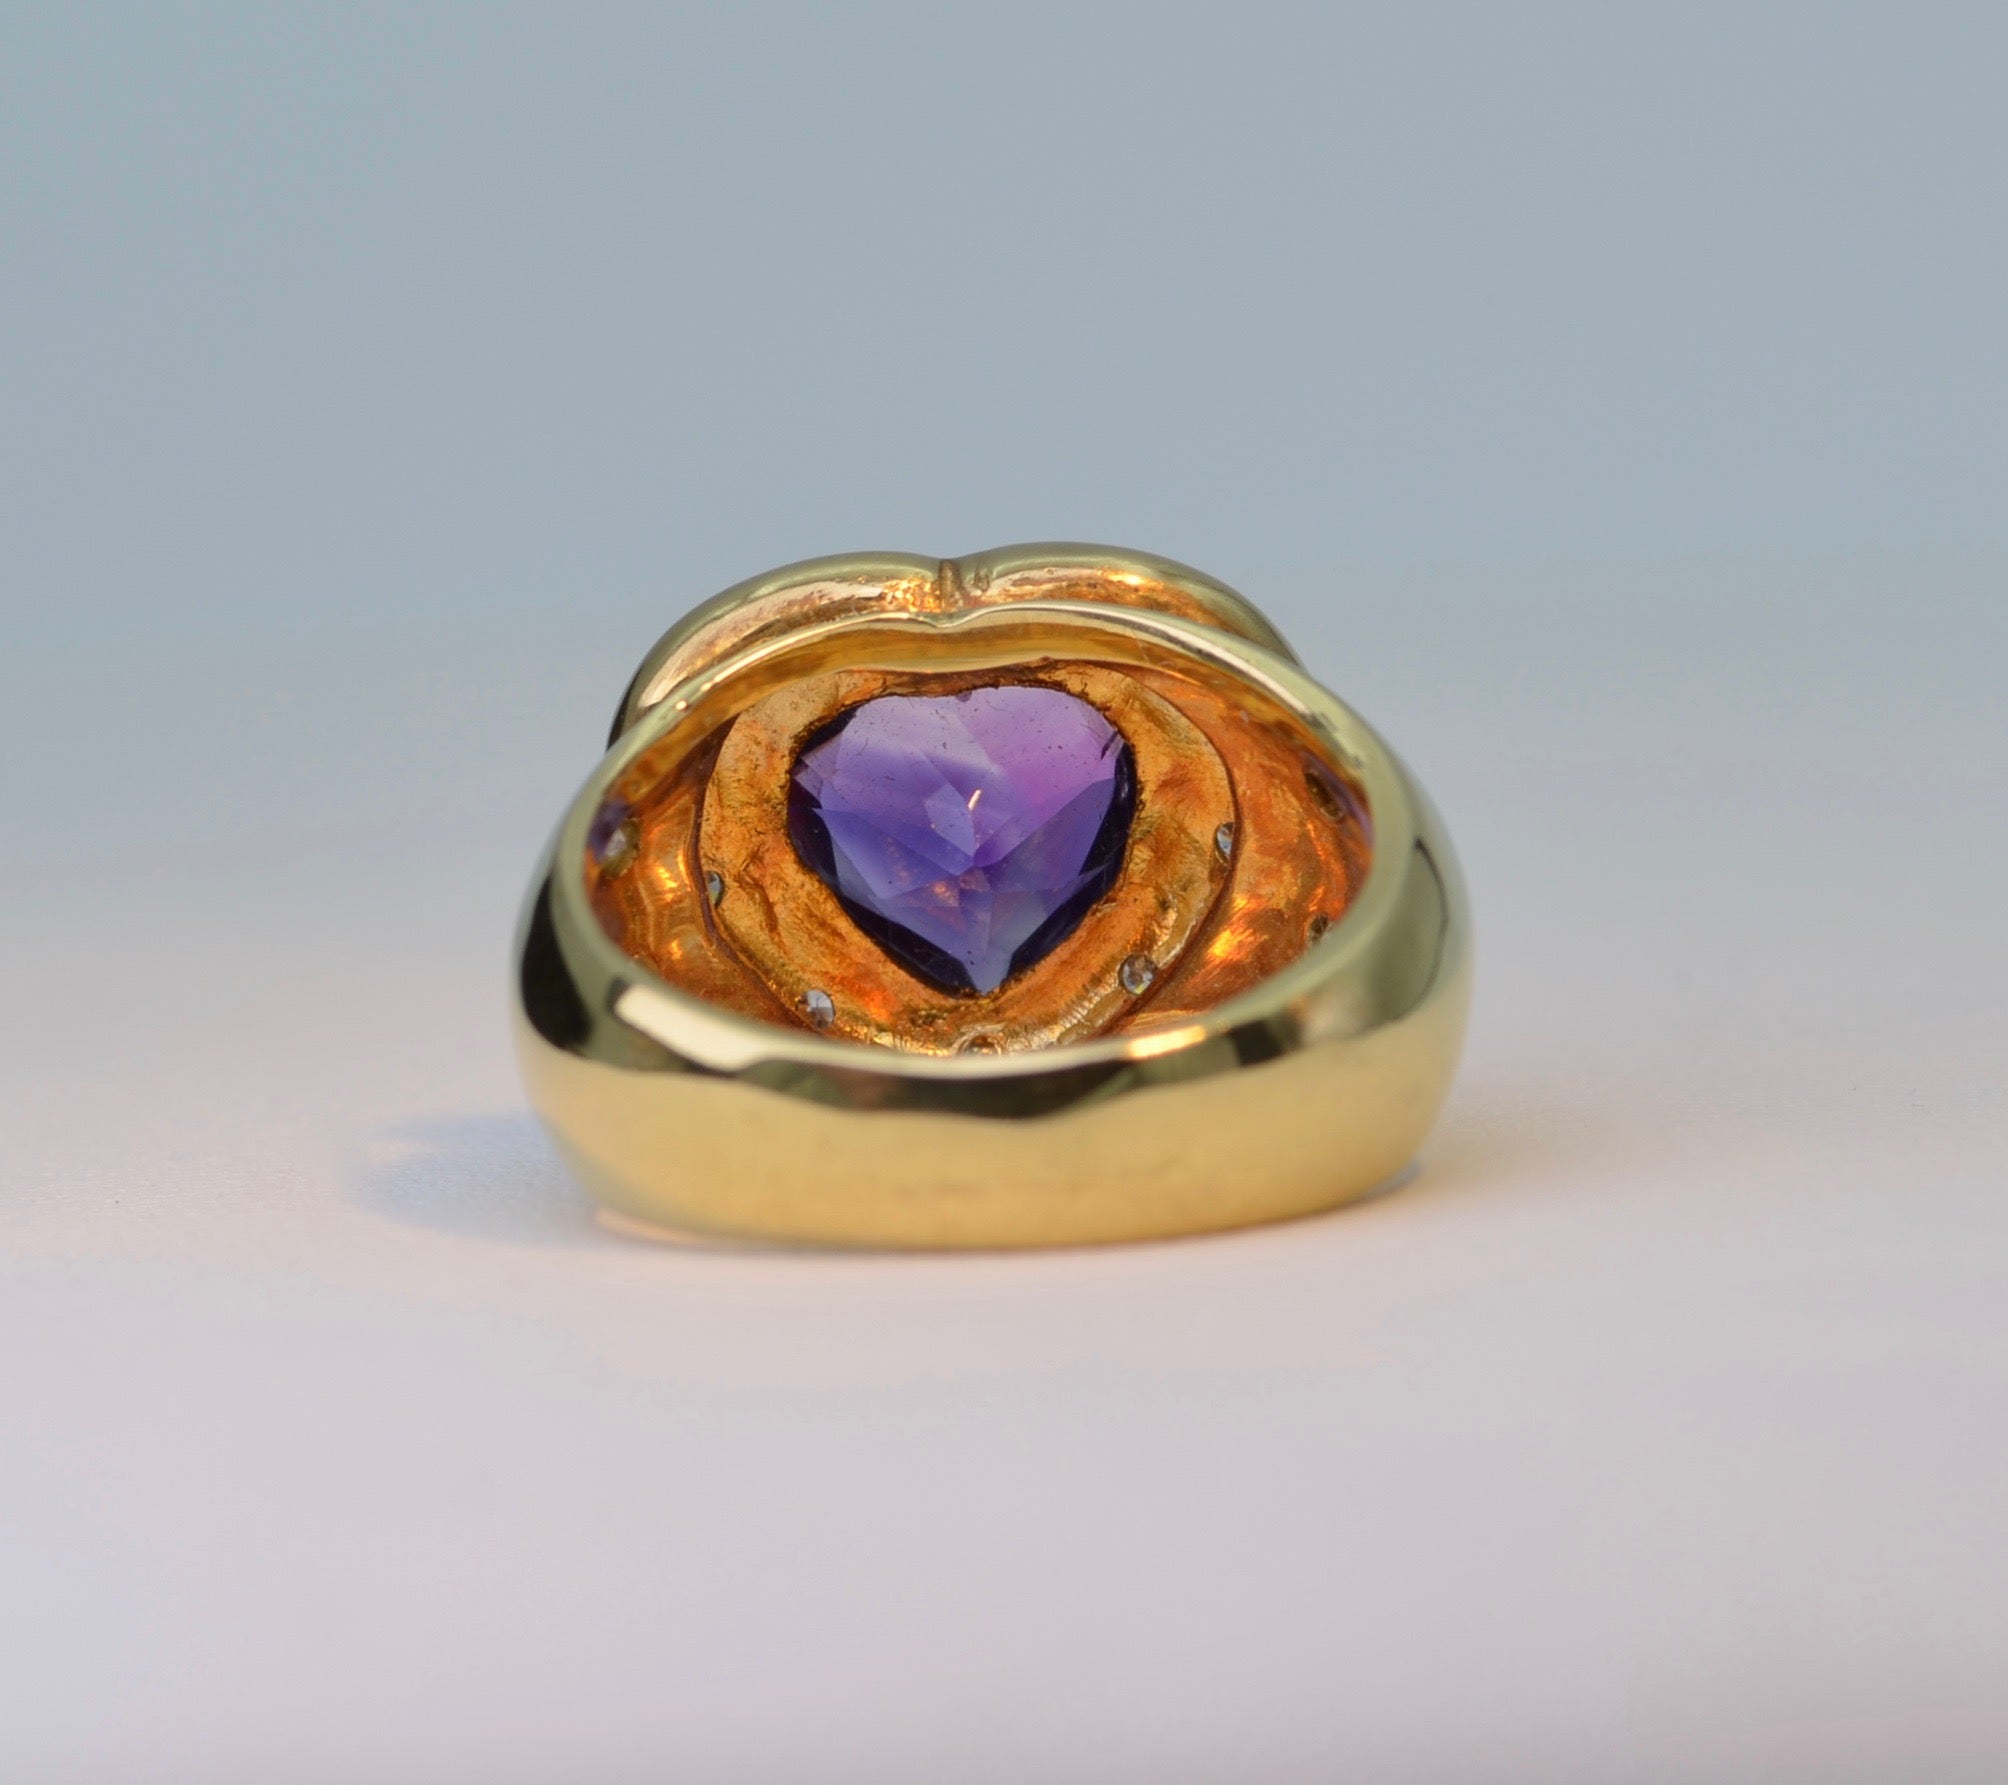 HOYON Luxury 18K White Gold Color Deep Purple Diamond Ring Women's Zircon  Flower Style amethyst Open Ring Jewelry Gift Box - AliExpress